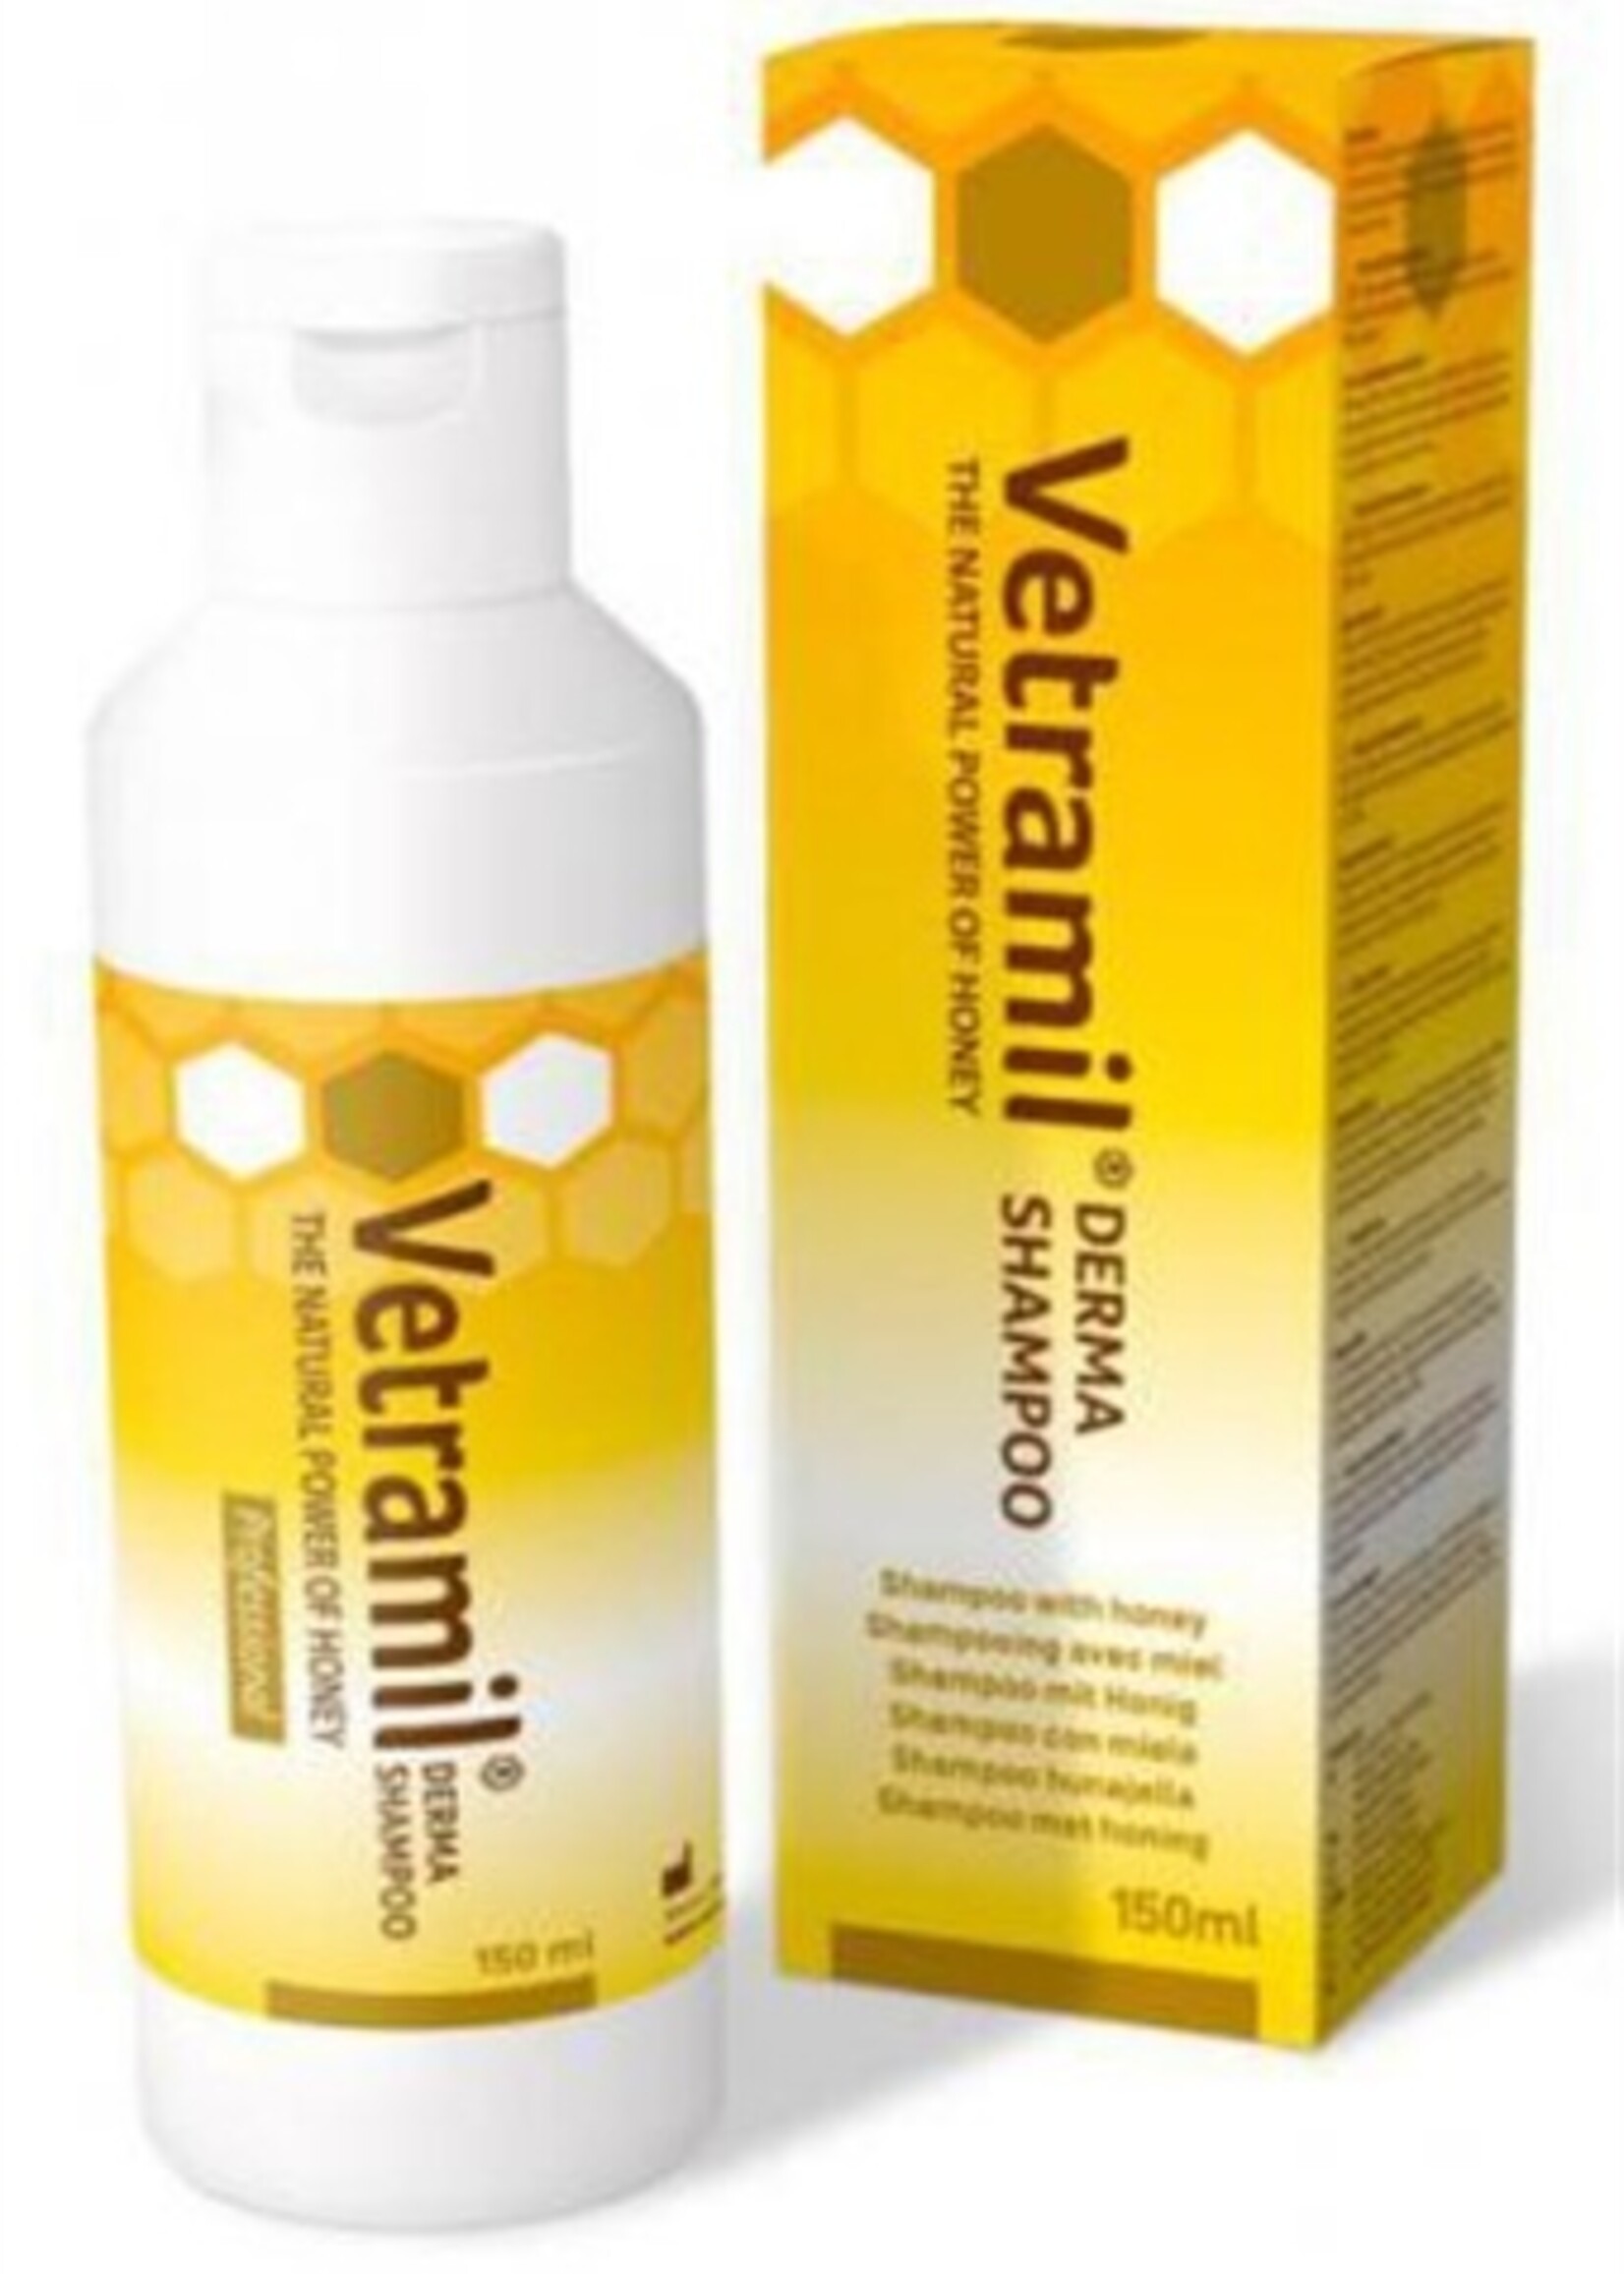 Vetramil Vetramil derma shampoo